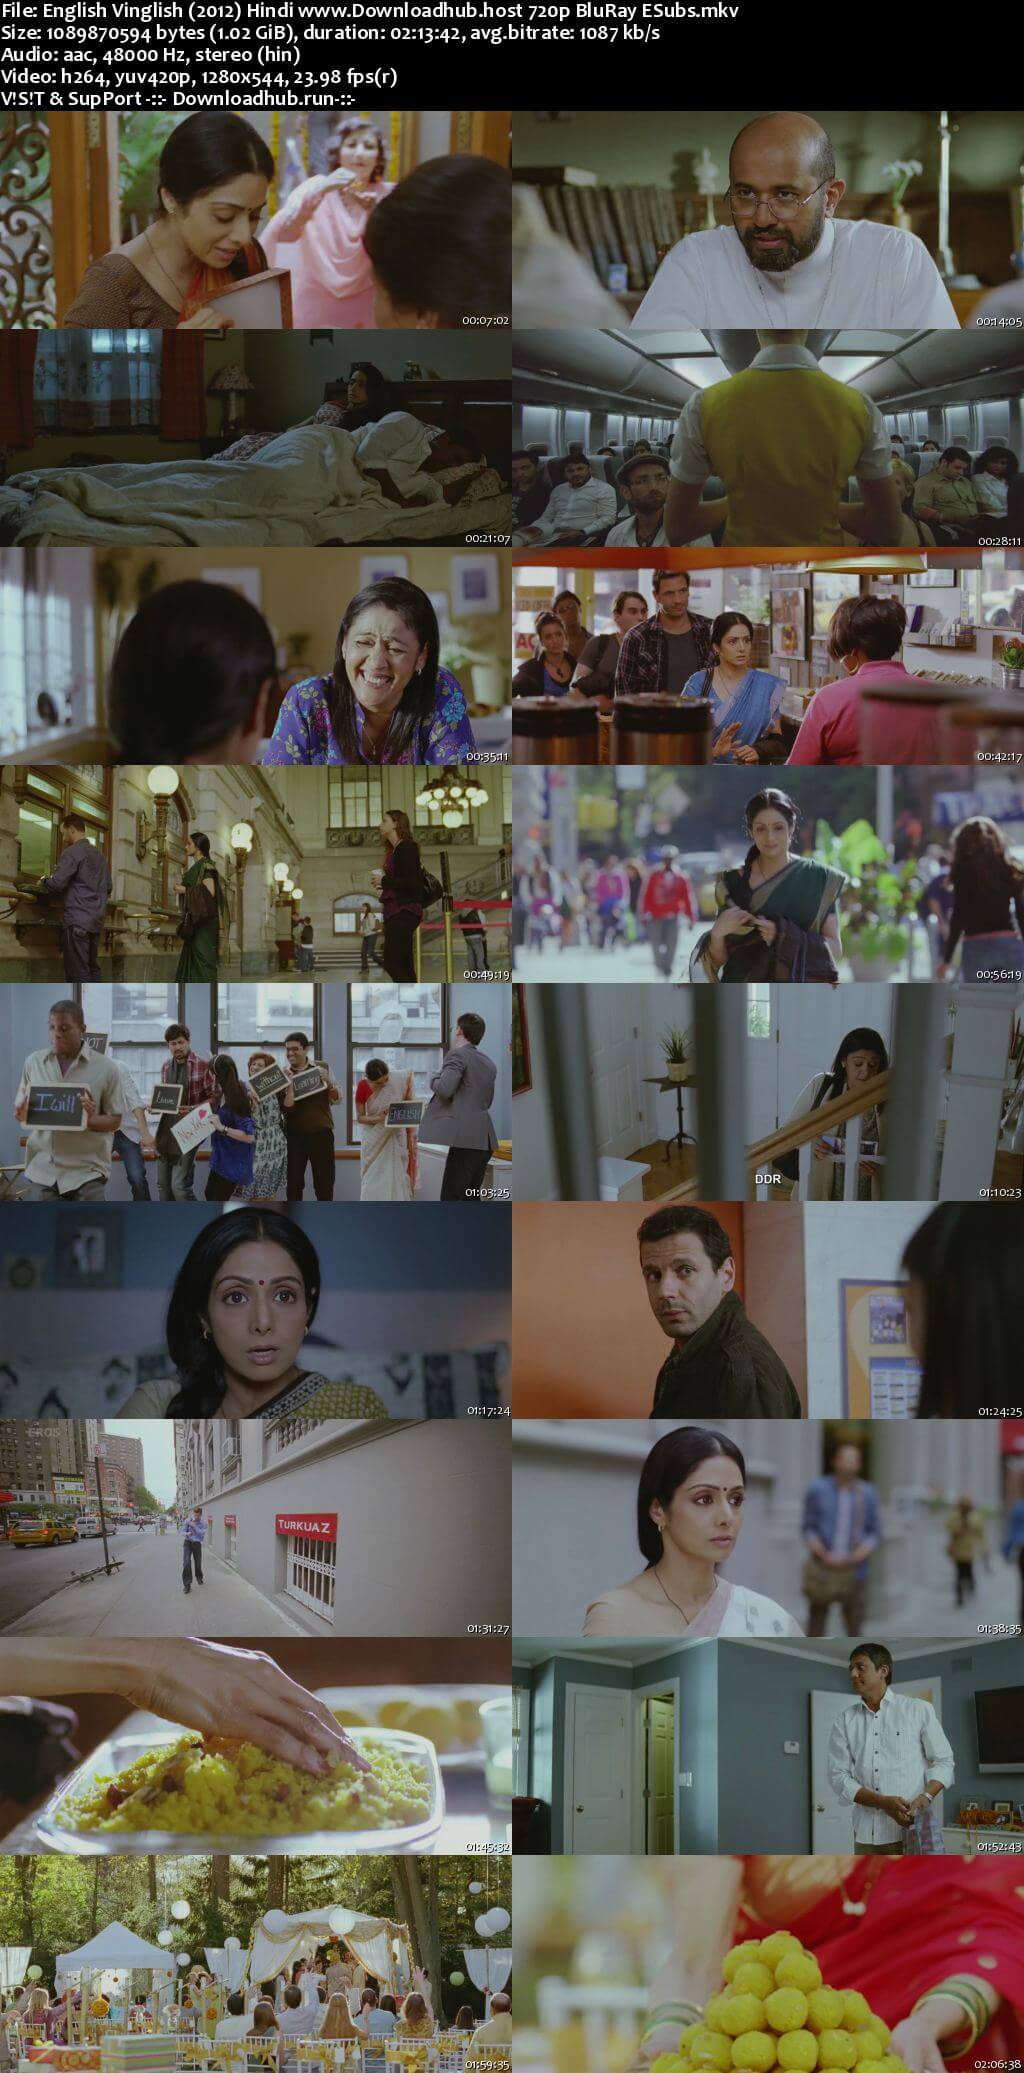 English Vinglish 2012 Hindi 720p BluRay ESubs